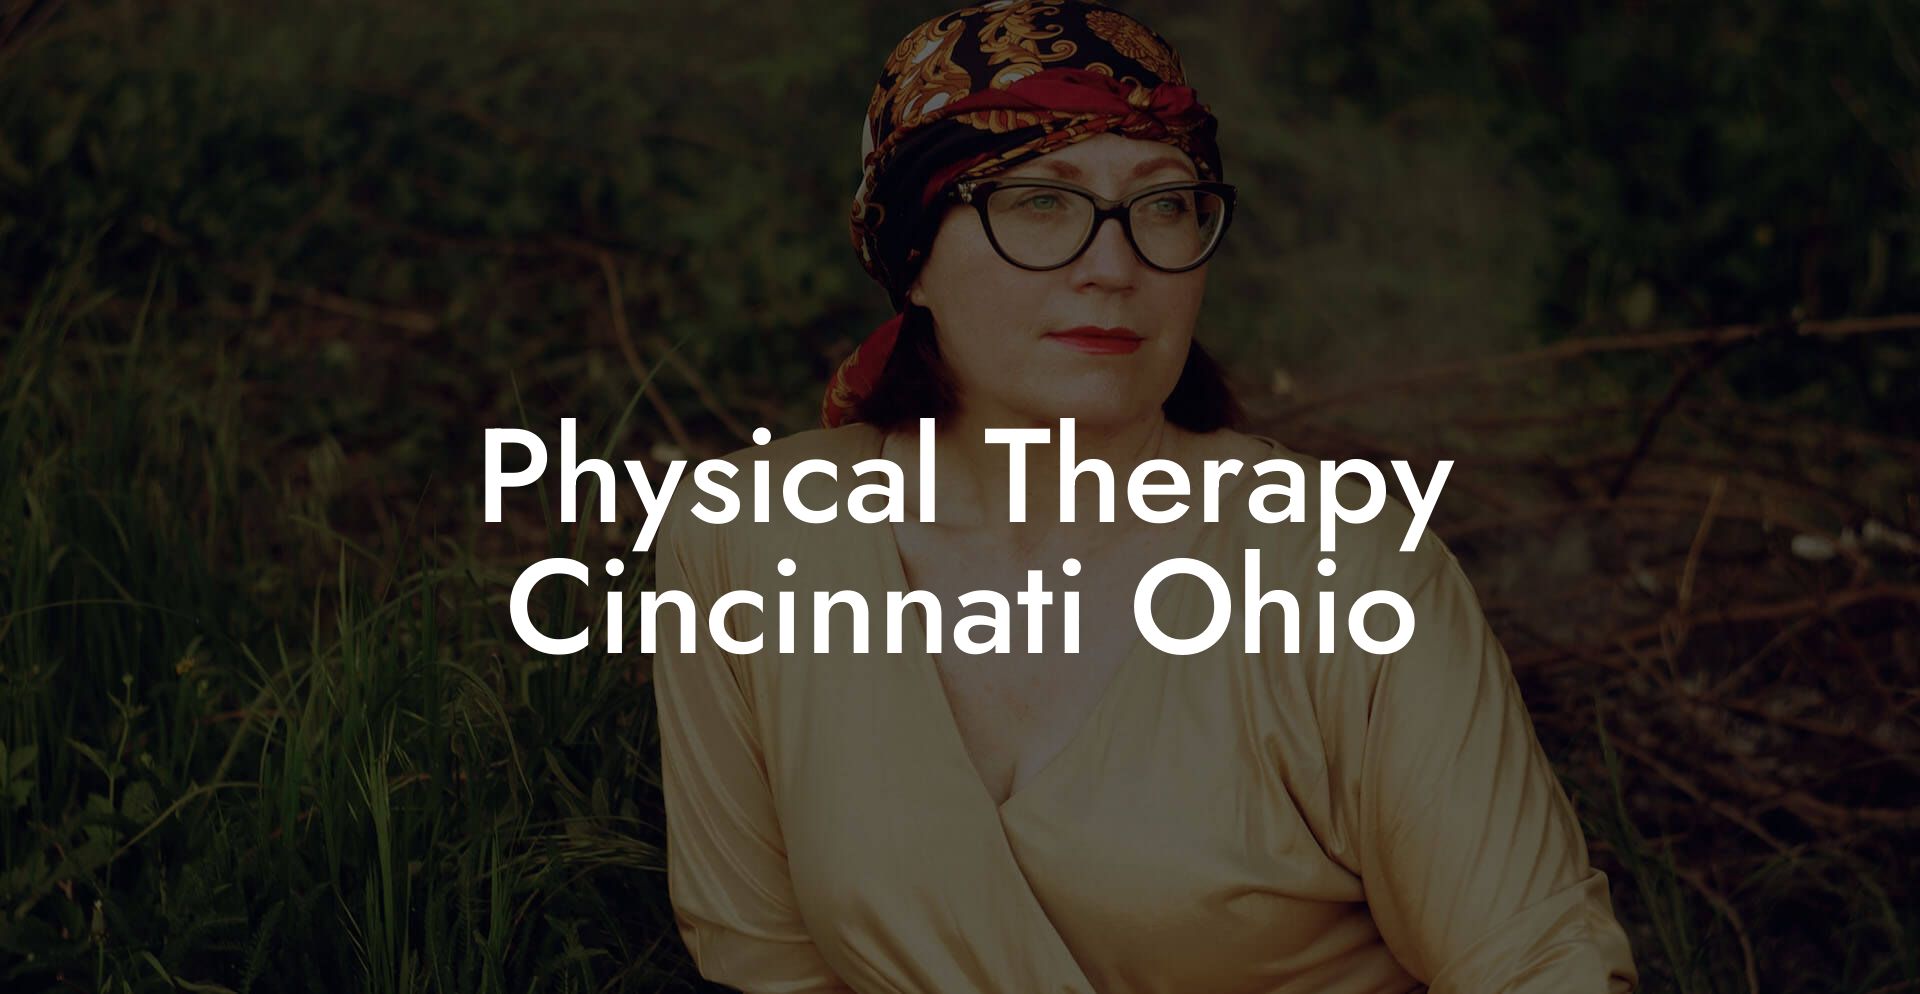 Physical Therapy Cincinnati Ohio